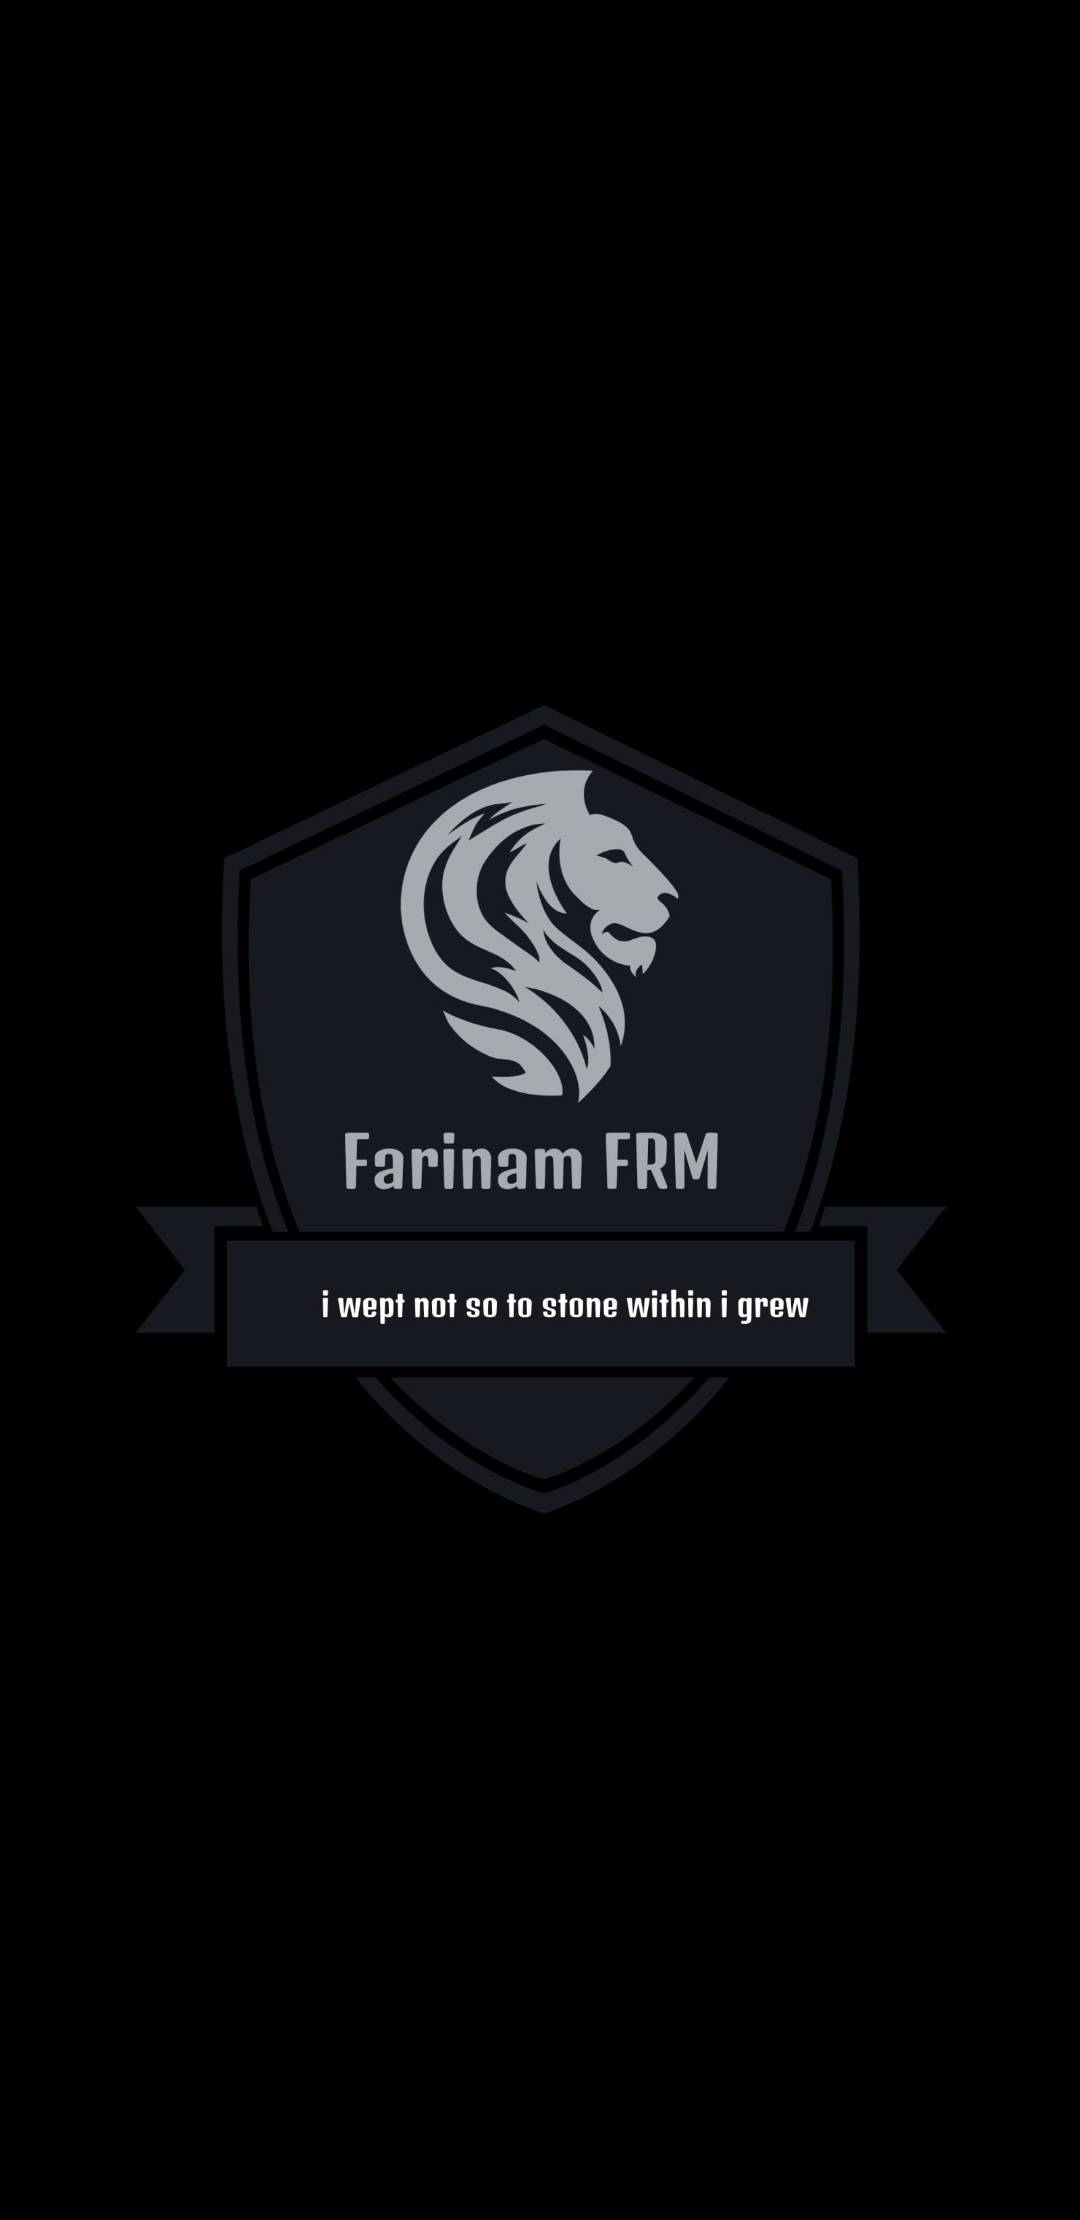 Farinam FRM